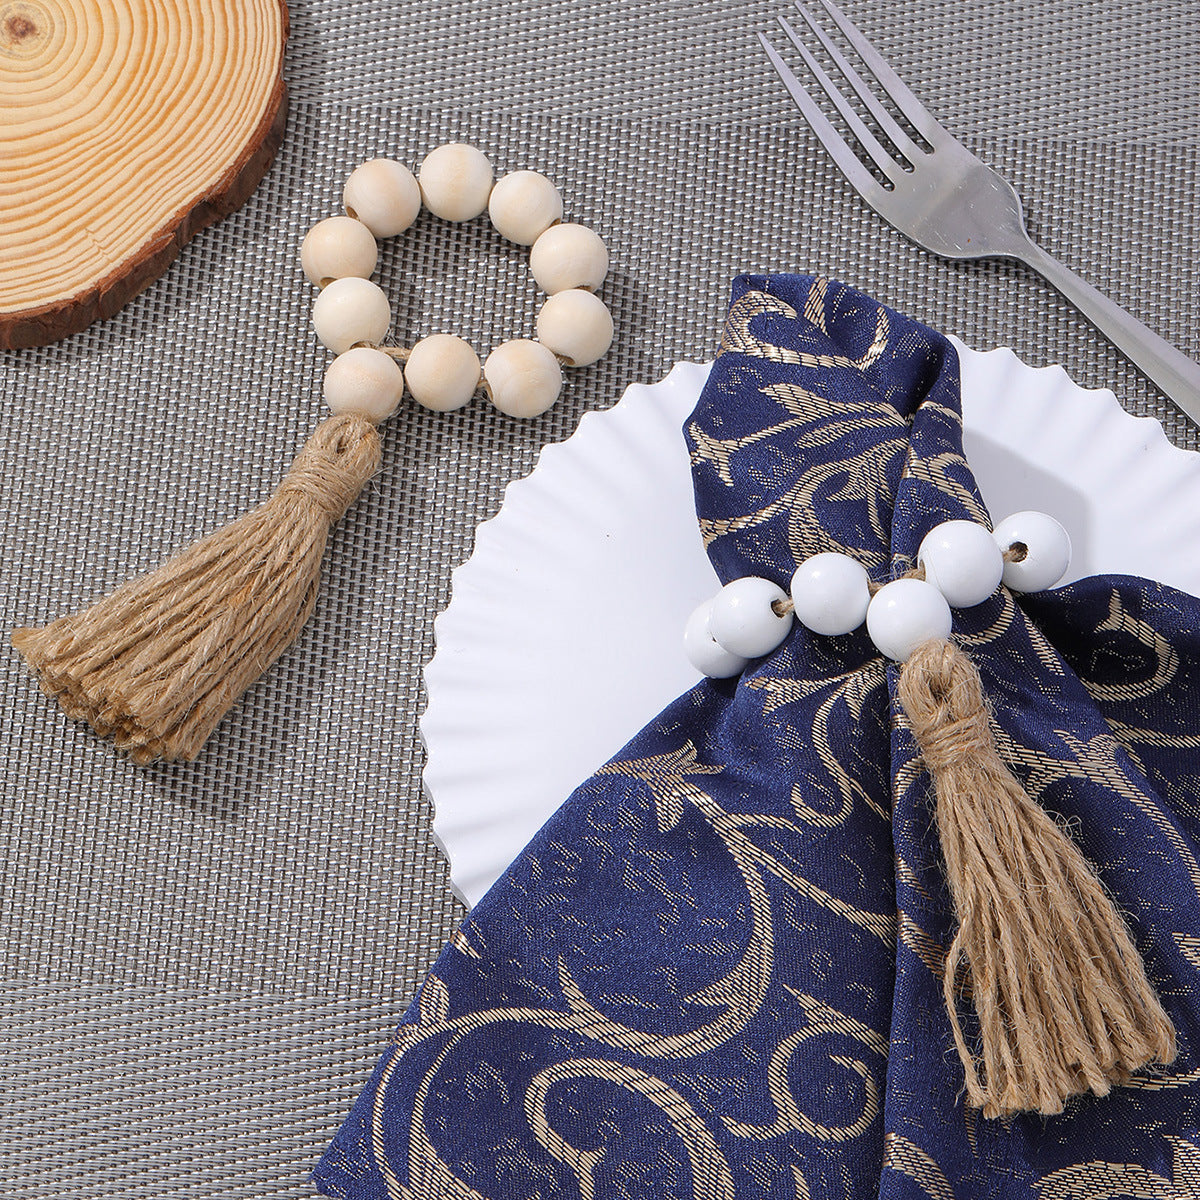 Bulk Wood Beads Tassel Napkin Rings Table Decoration Wholesale